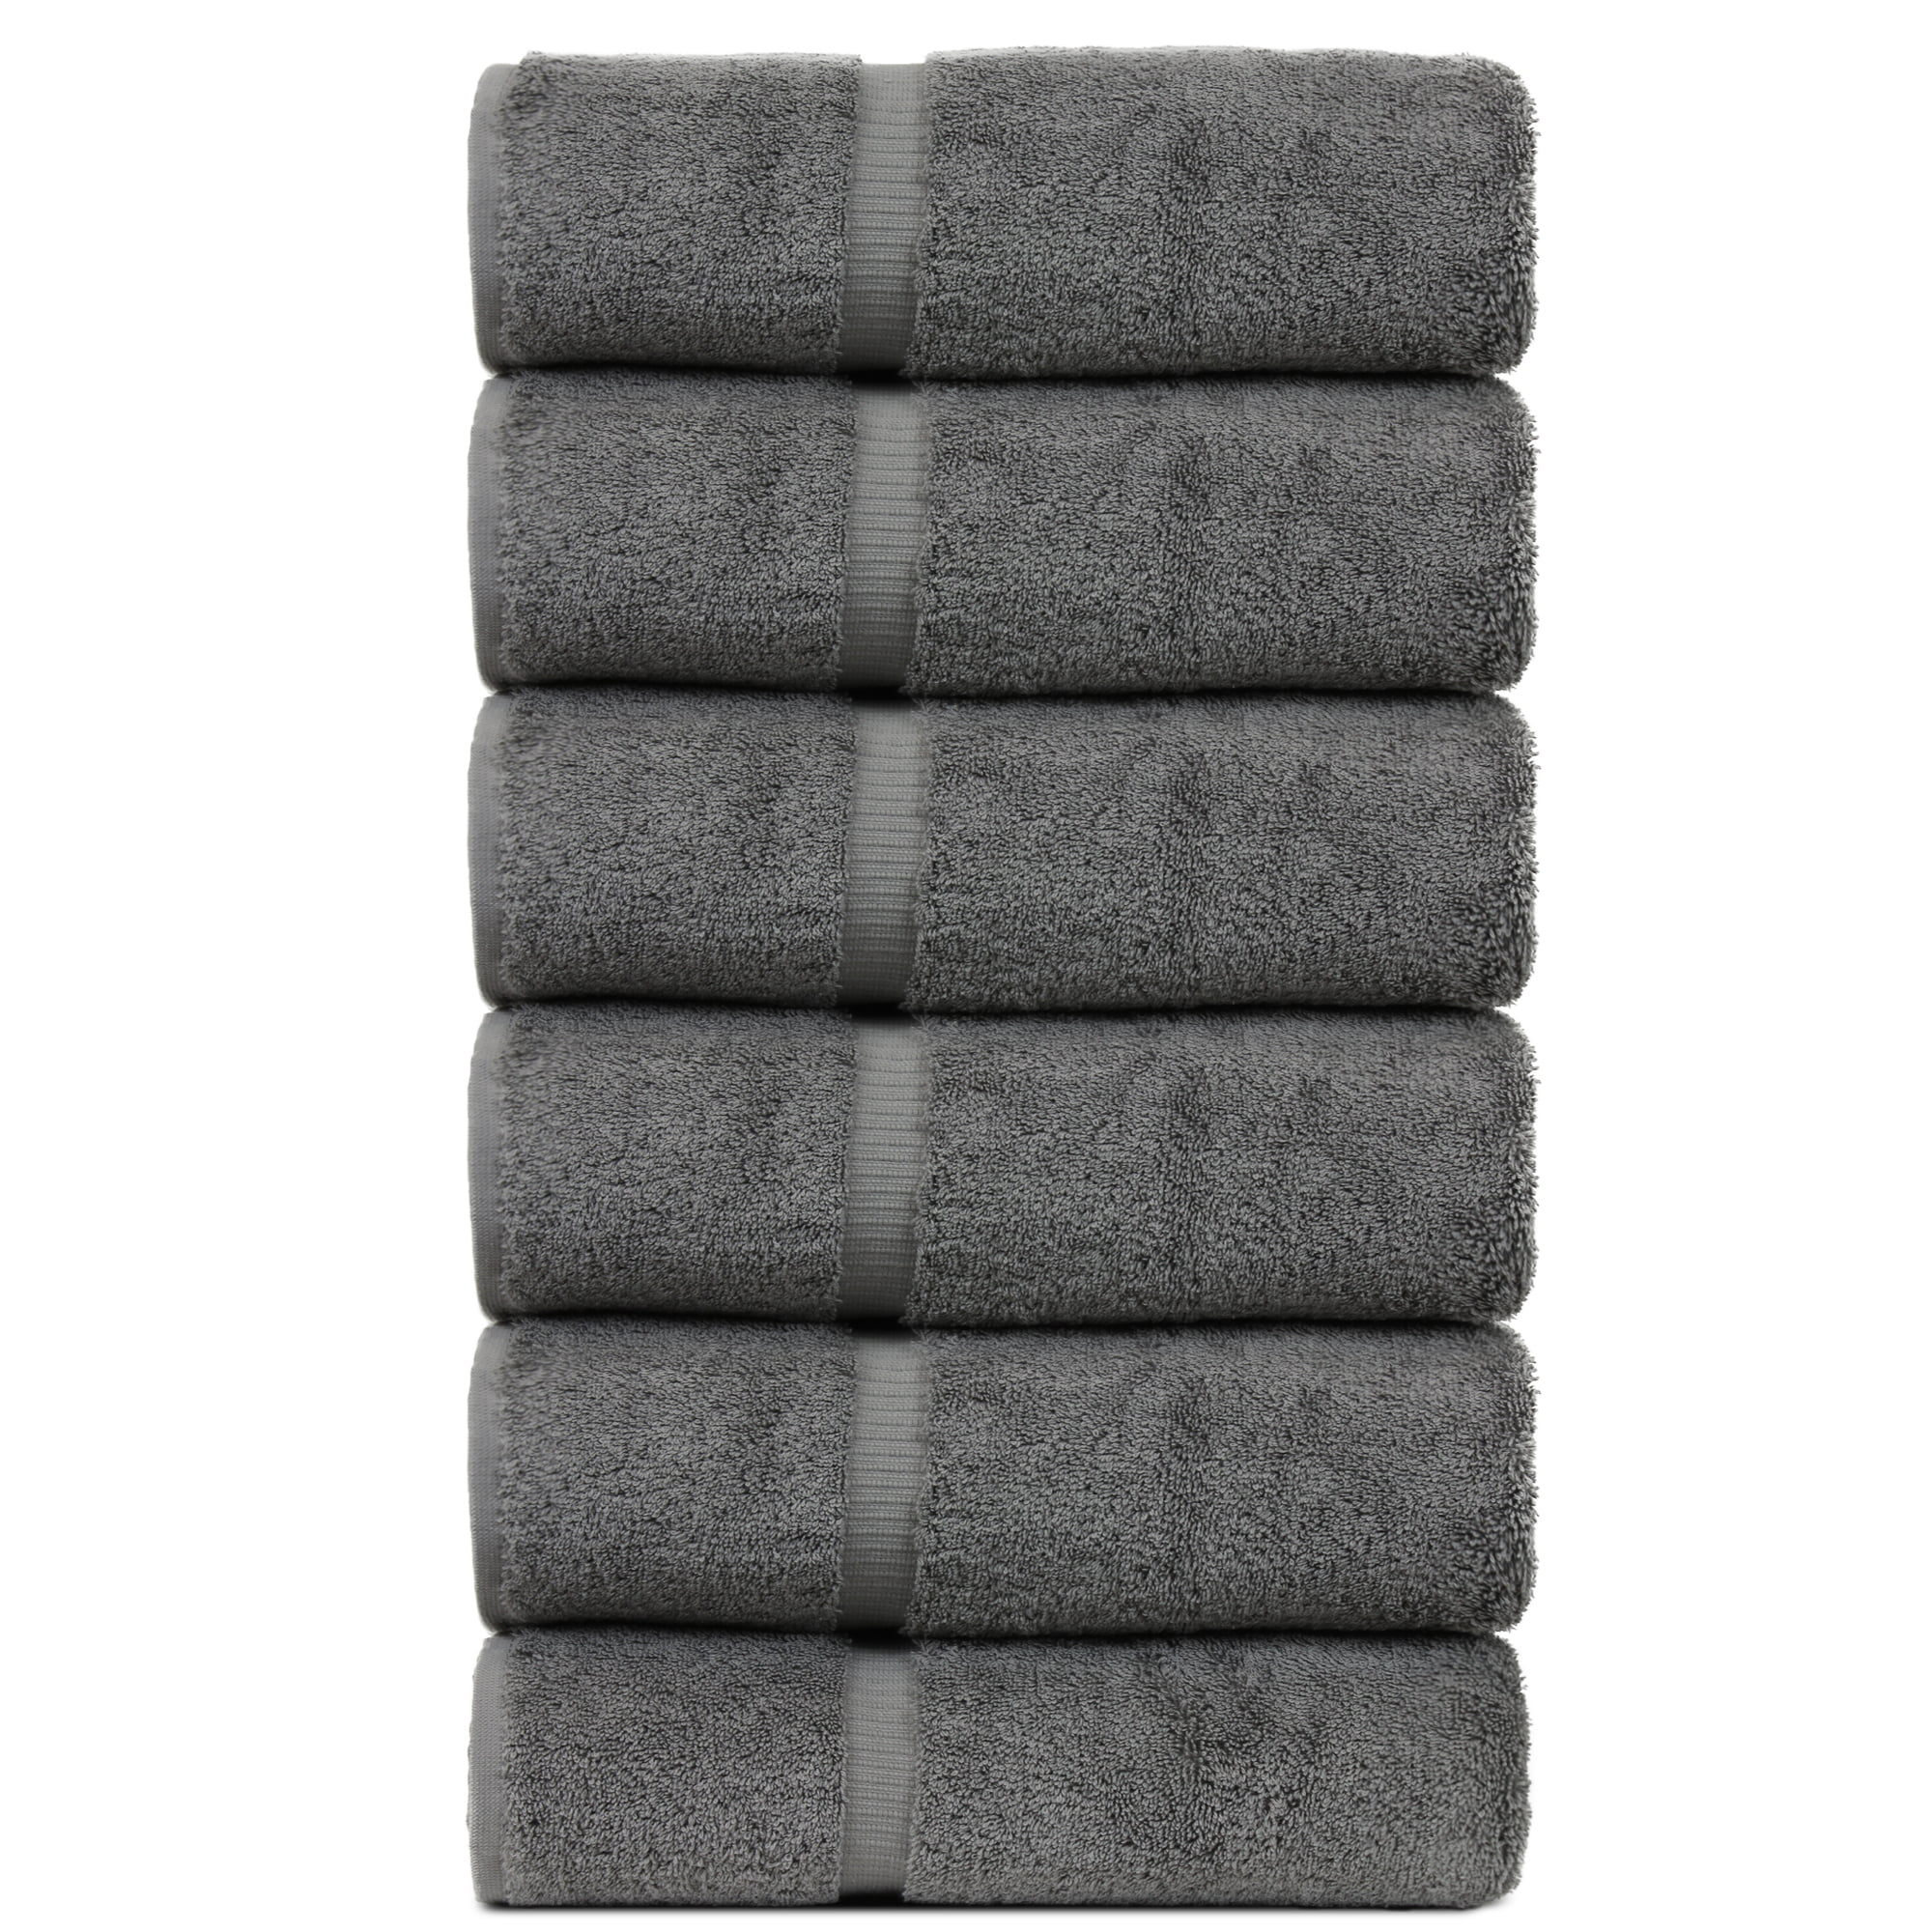 Gray Set Of 6 Hand Turkish Bath Towels Cotton Luxury Hotel & Spa Towel 